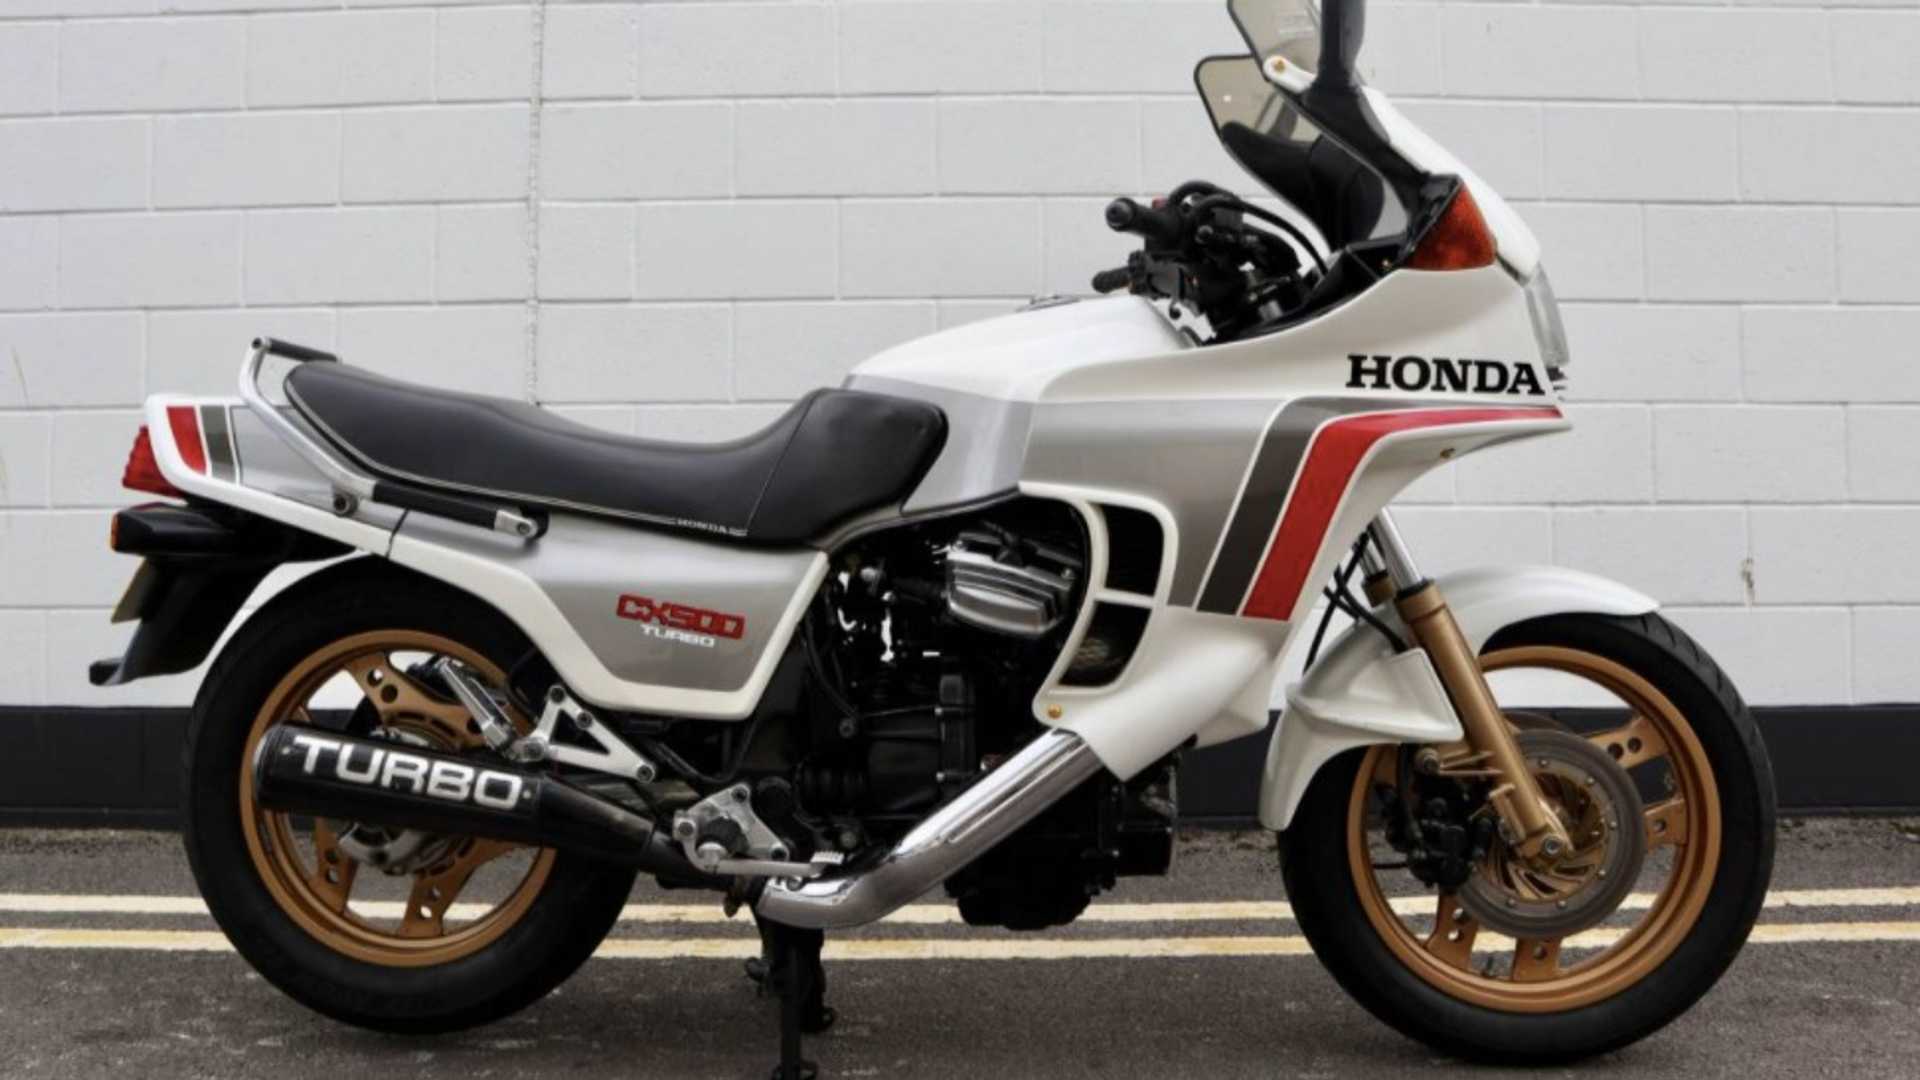 Tamiya 1/12 Honda Cx500 Turbo Motorcycle Model Kit T14016 for sale online 